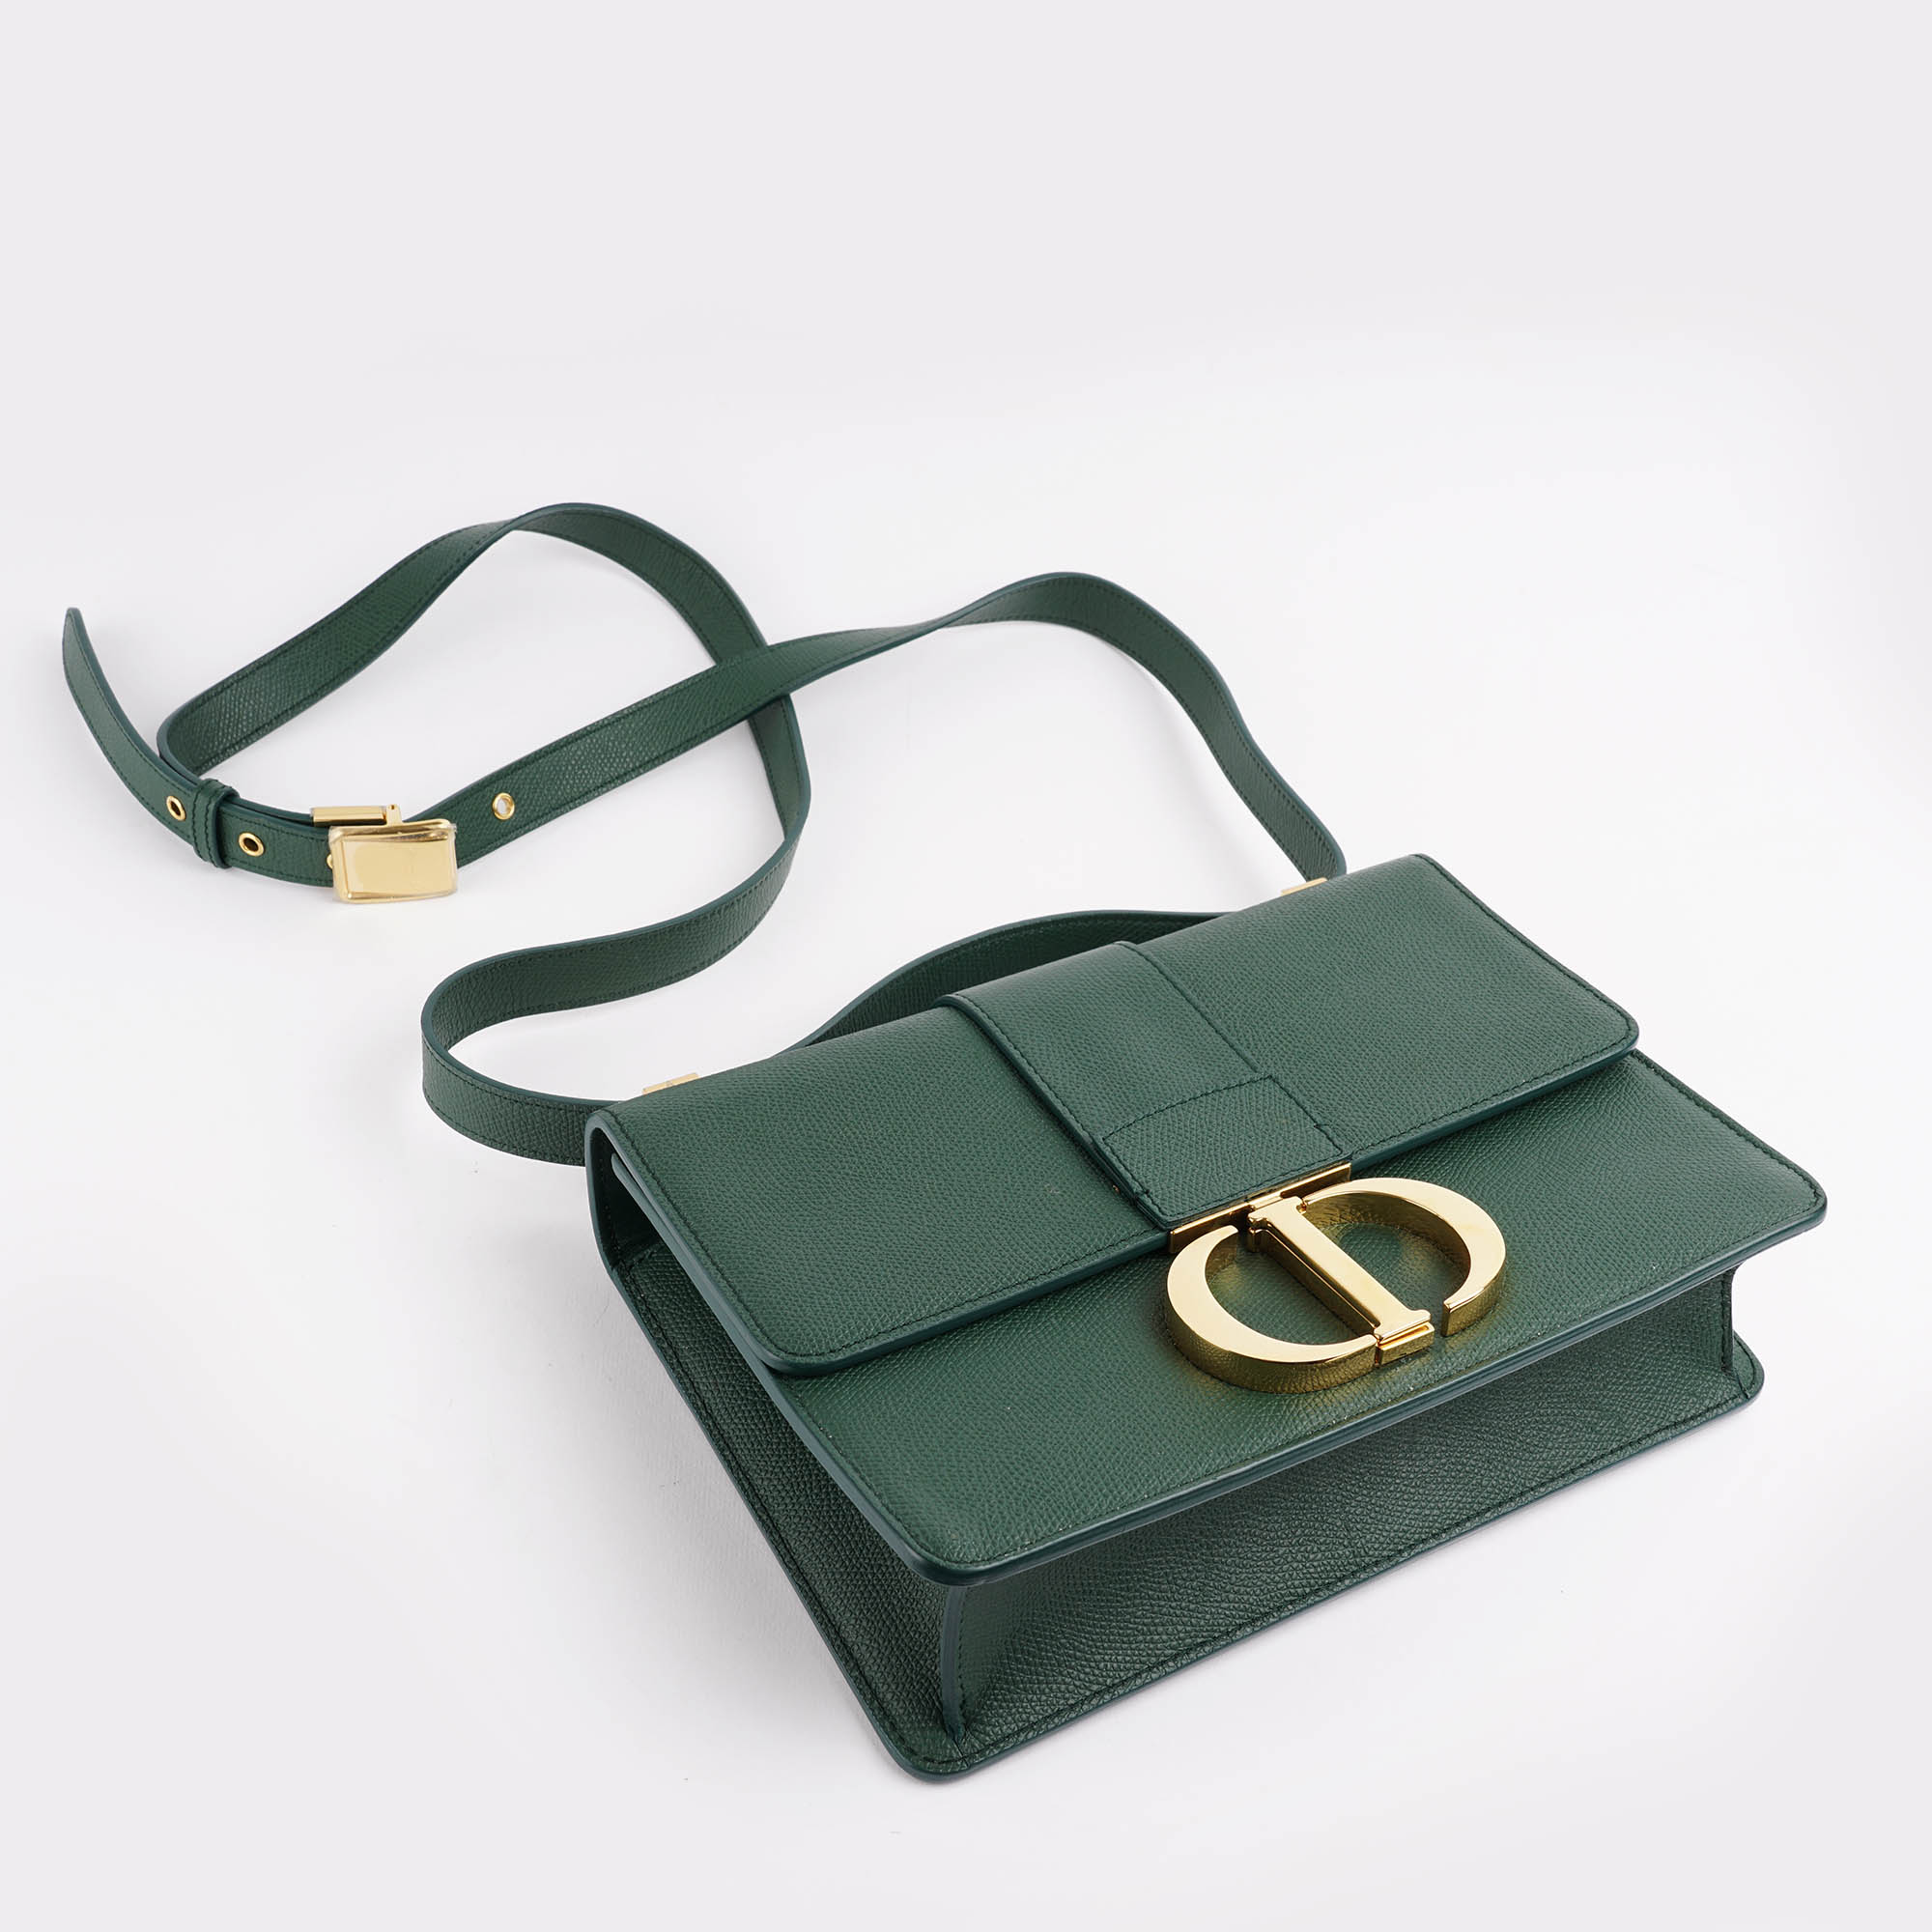 30 Montaigne Shoulder Bag - CHRISTIAN DIOR - Affordable Luxury image